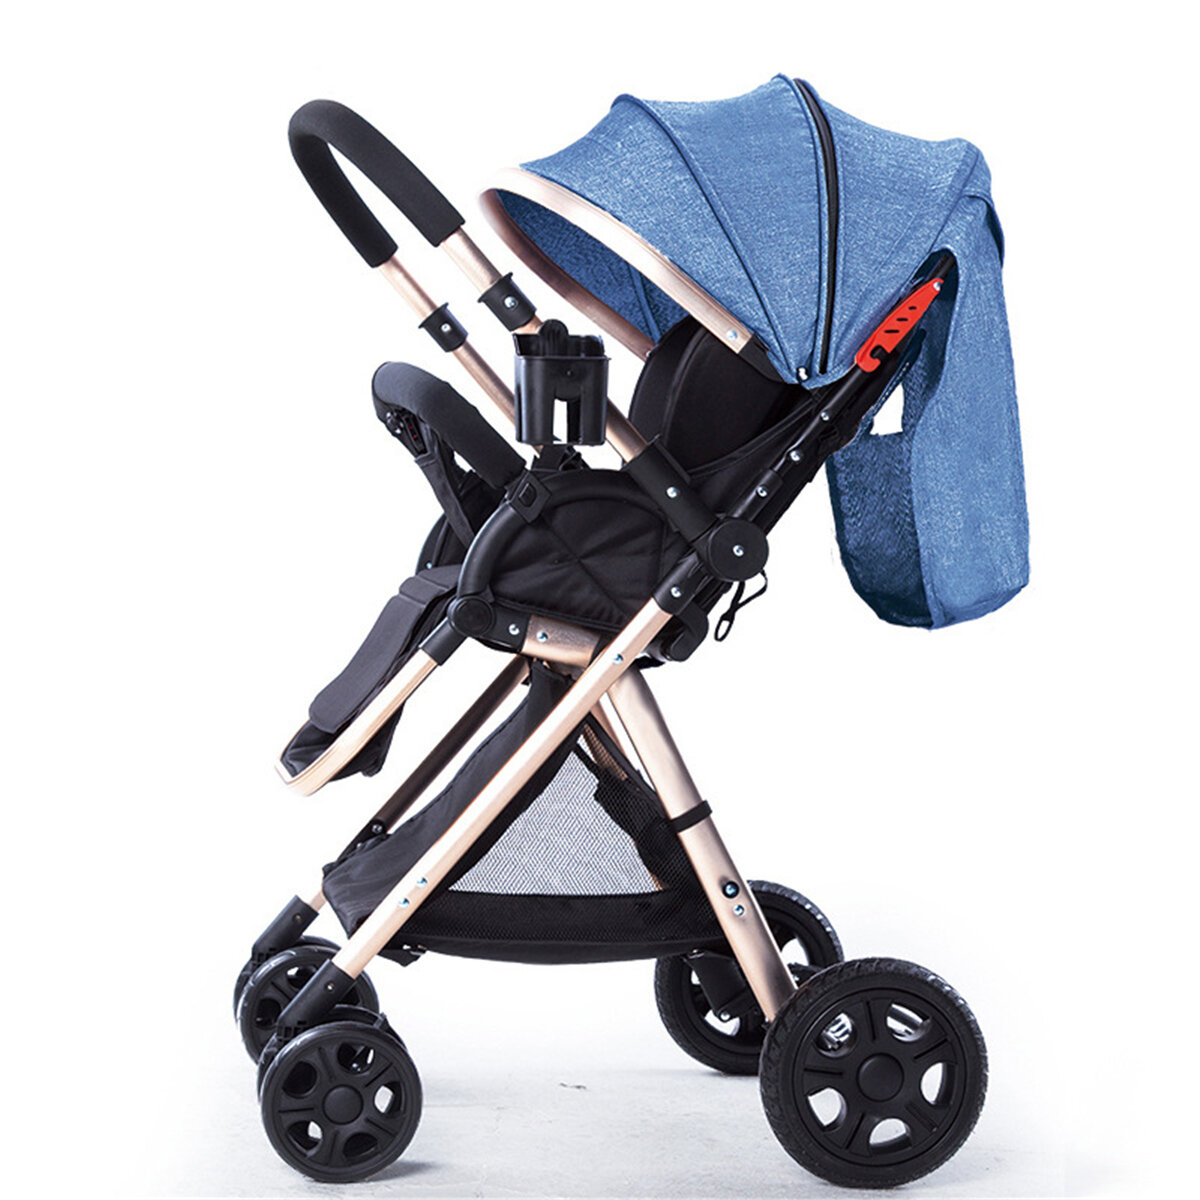 Folding Lightweight Baby Stroller Cart Sit Lie Two-Way Kids Stroller Car Travel Pushchair